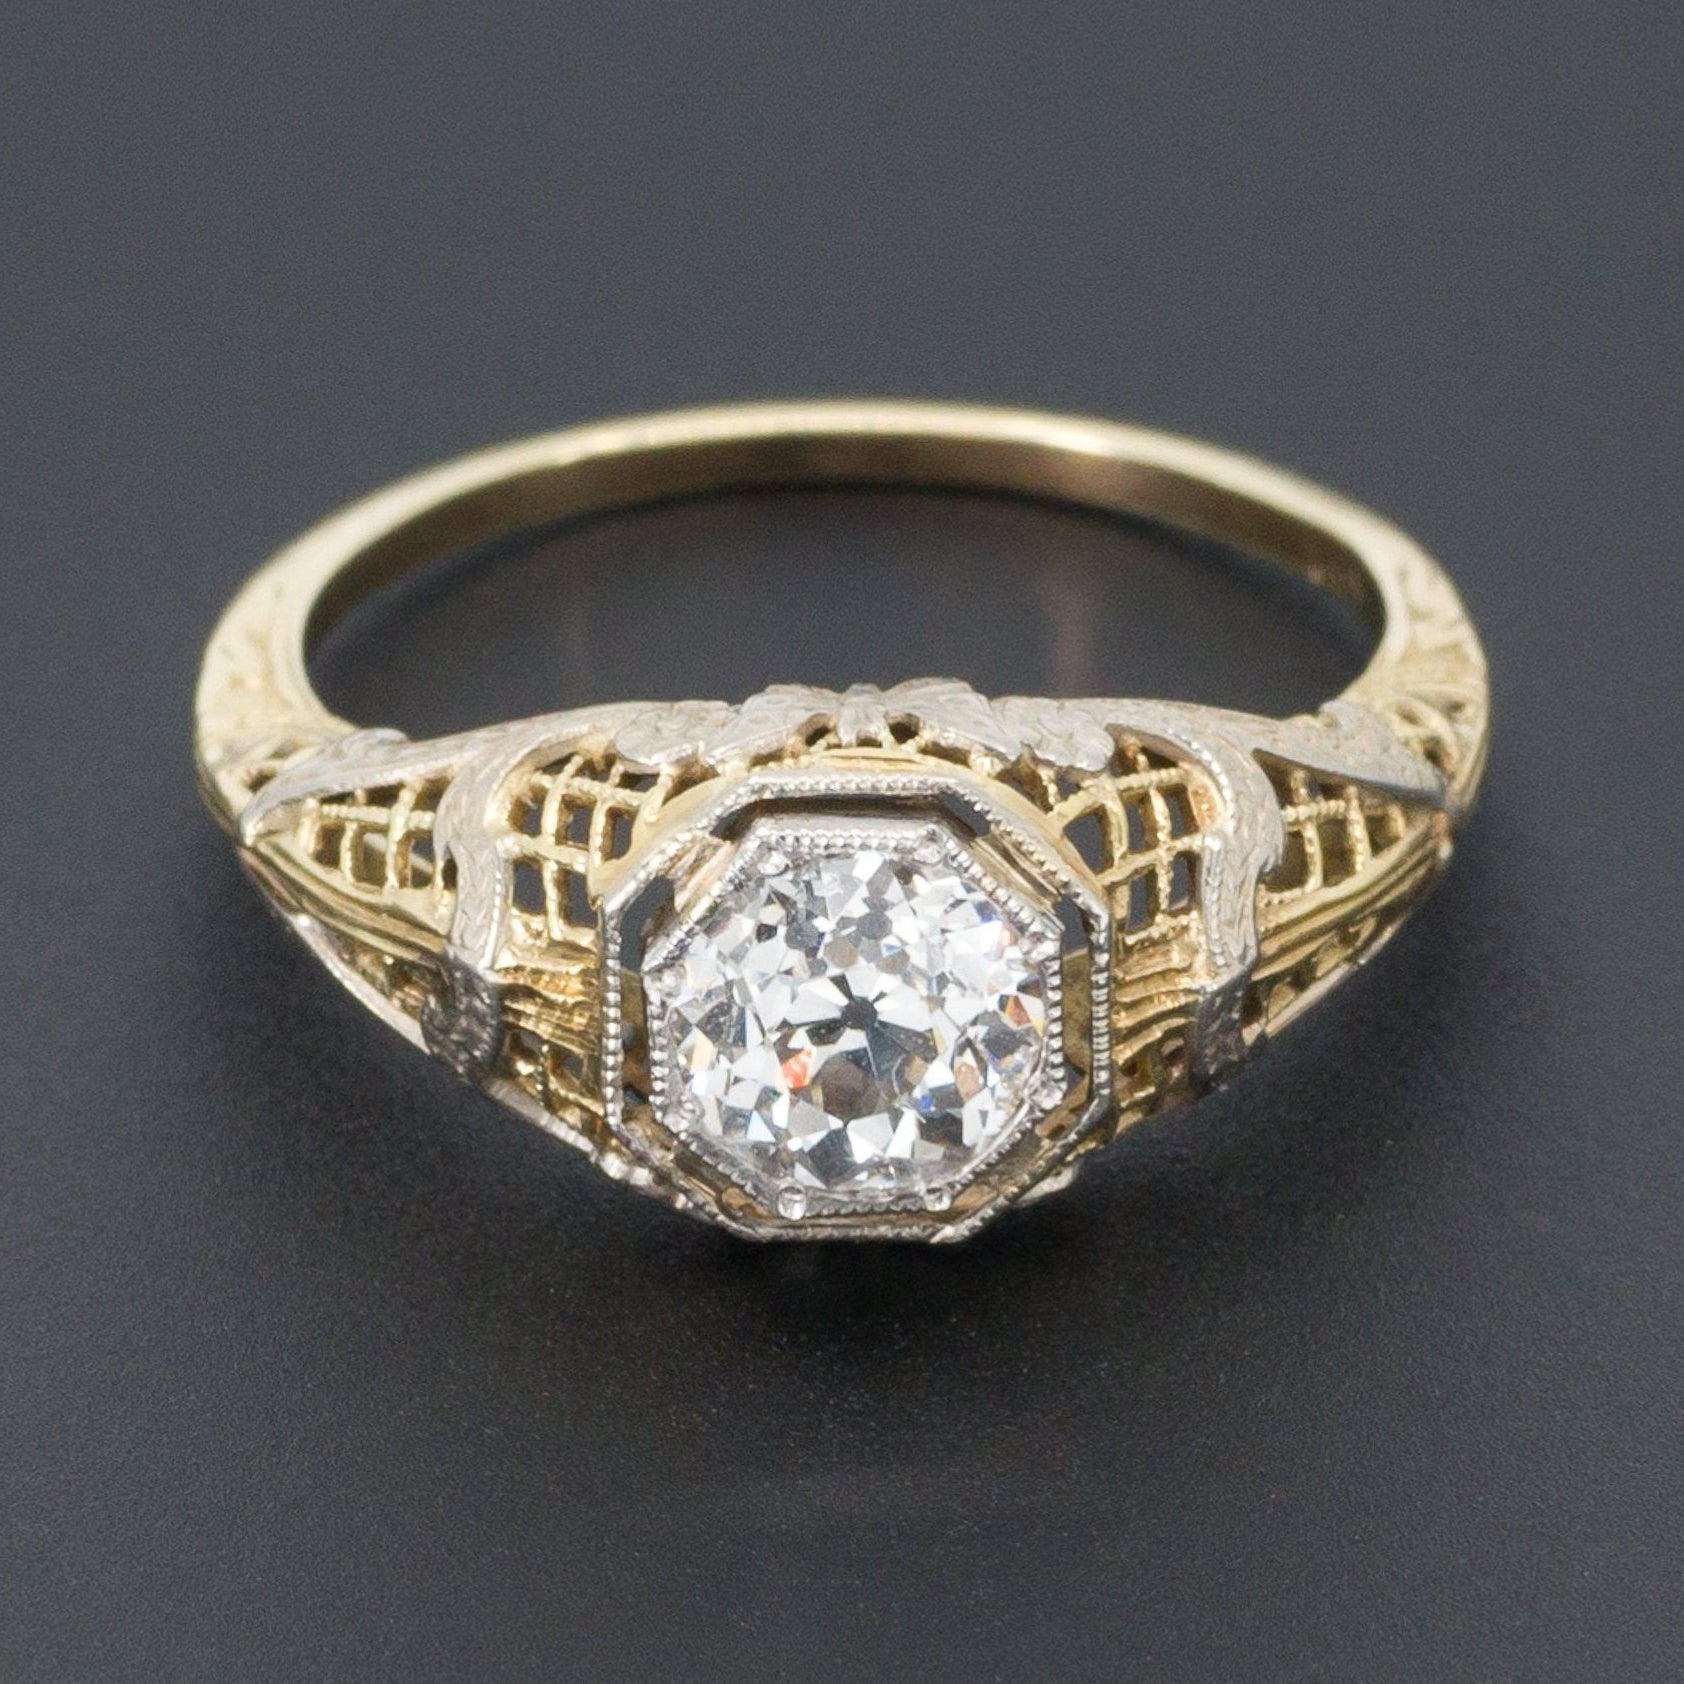 Vintage Engagement Ring | Butterfly Engagement Ring | Filigree Diamond Ring | Yellow & White Gold Filigree Ring